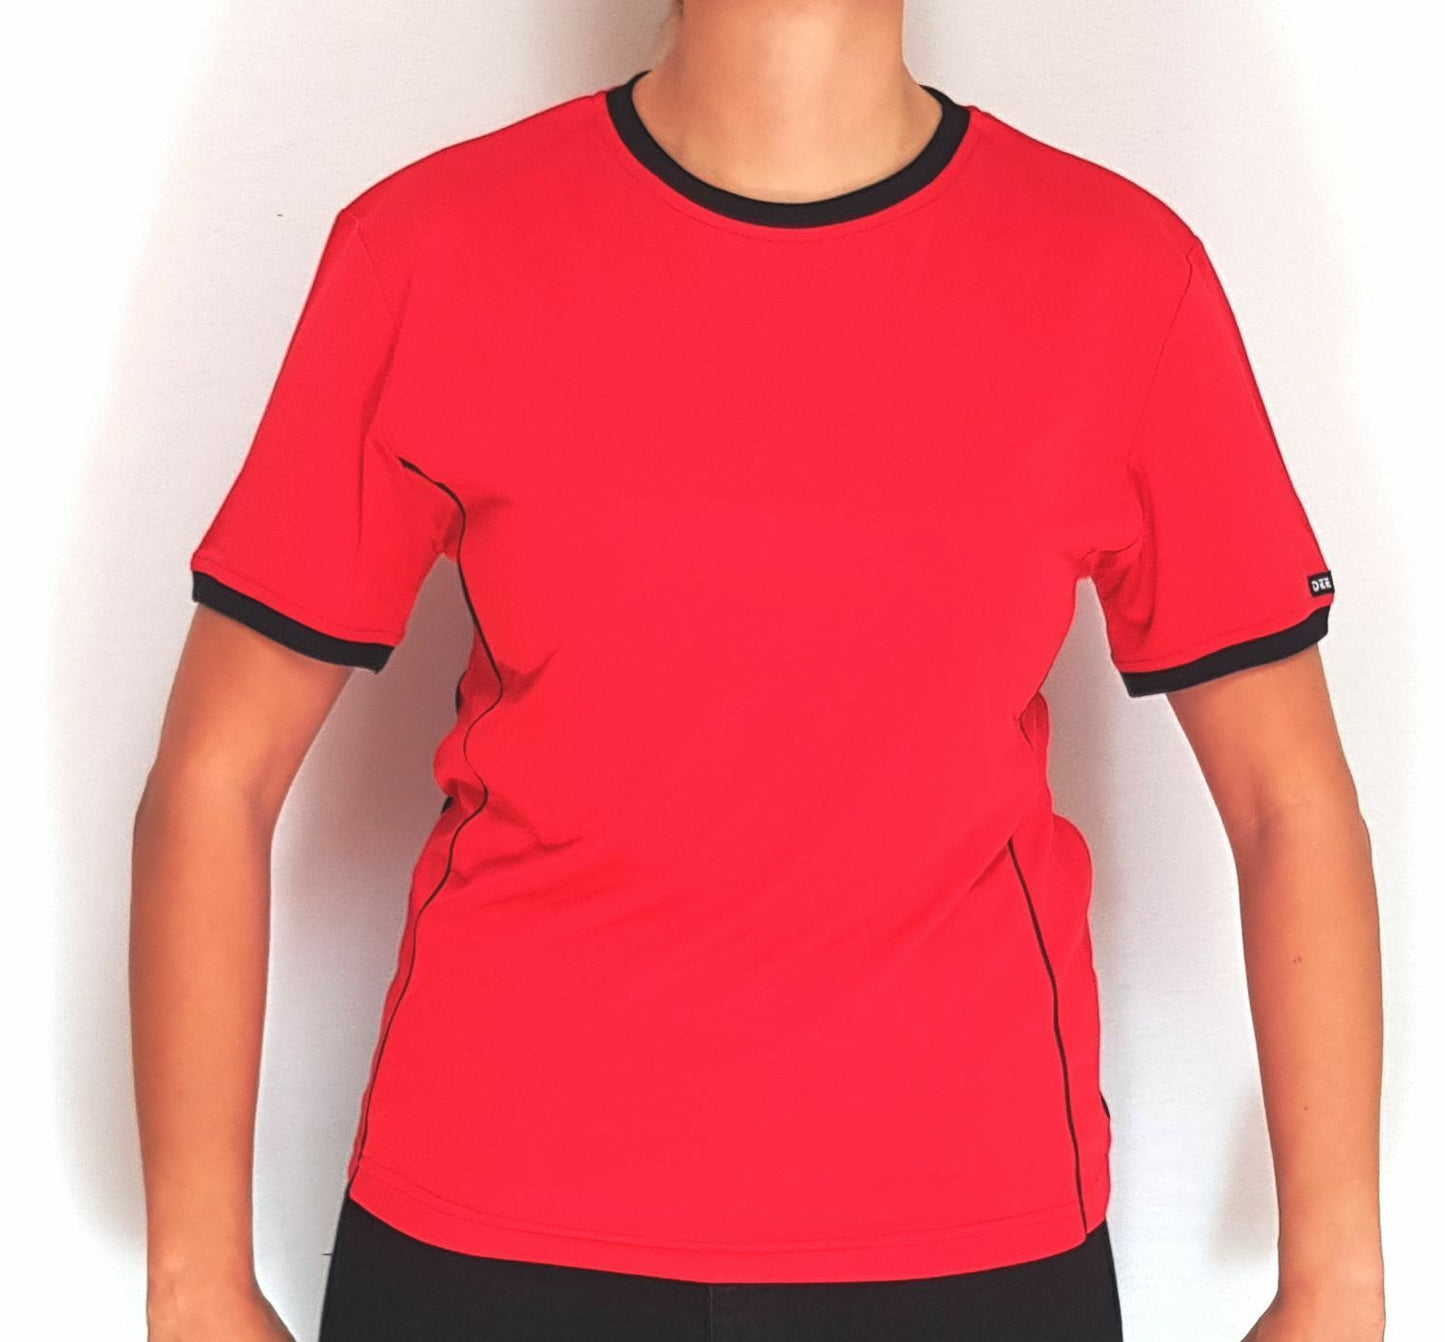 DEE - Damen Funktions Shirt - Microfaser pflegeleicht - 100% seidiges Polyester